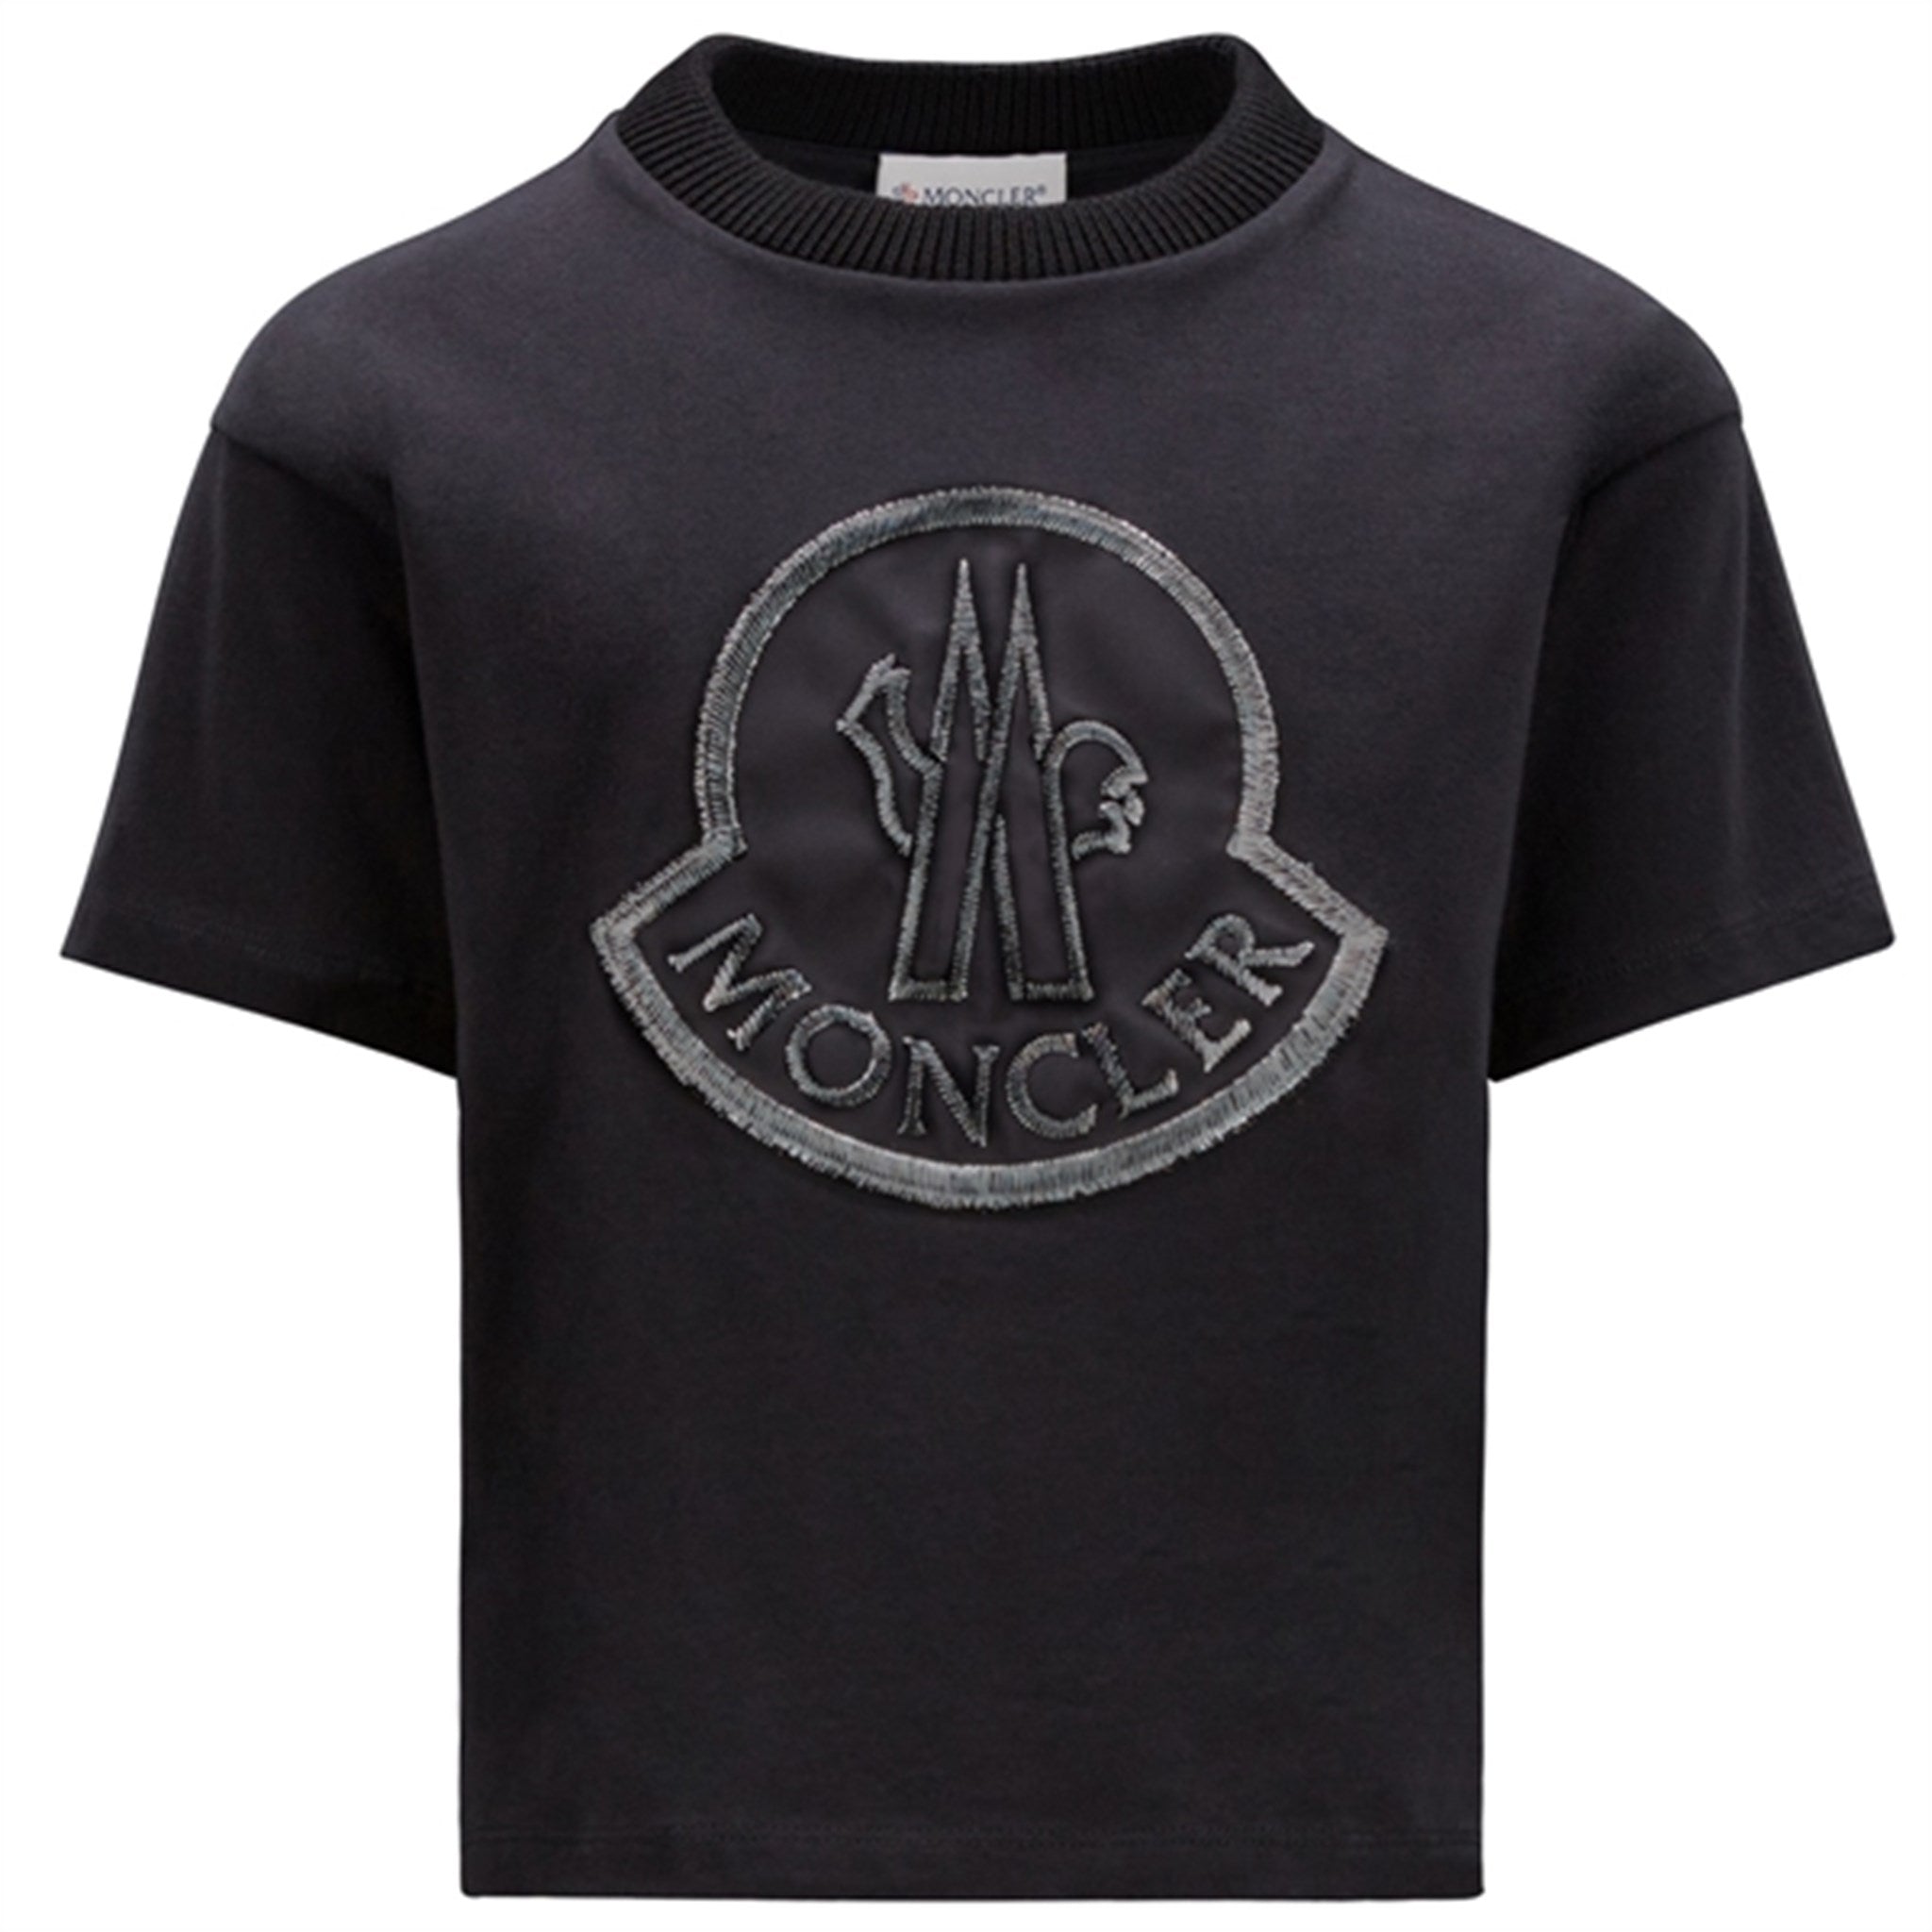 Moncler T-Shirt Black